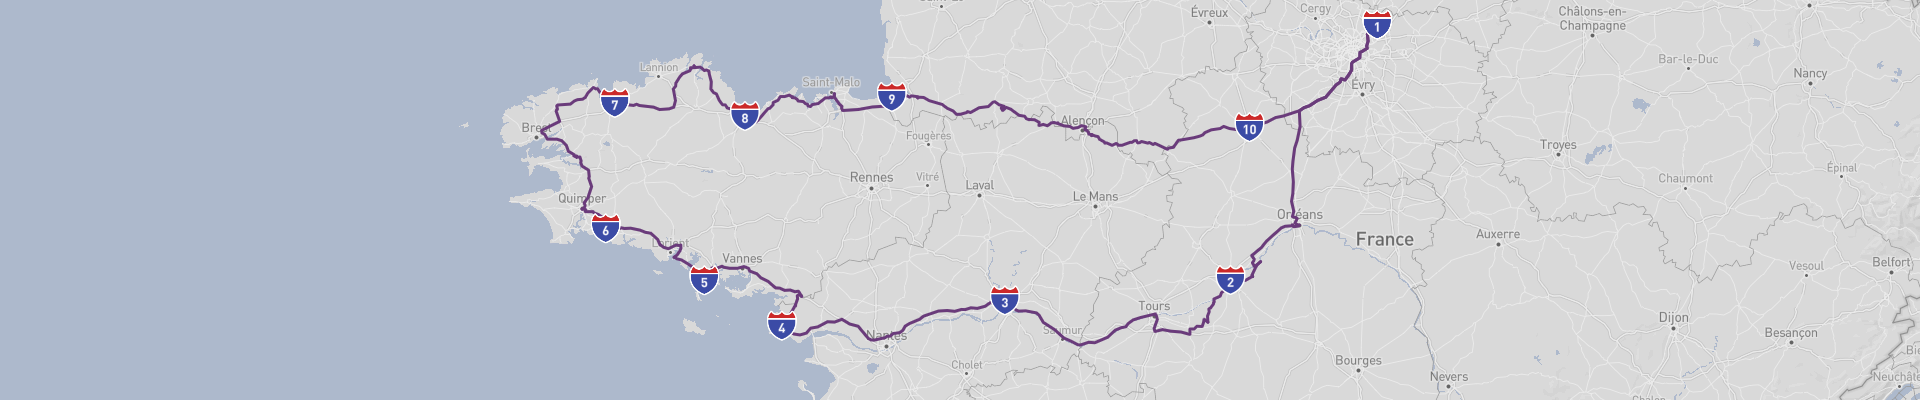 Langs de Loire naar Bretagne Road Trip